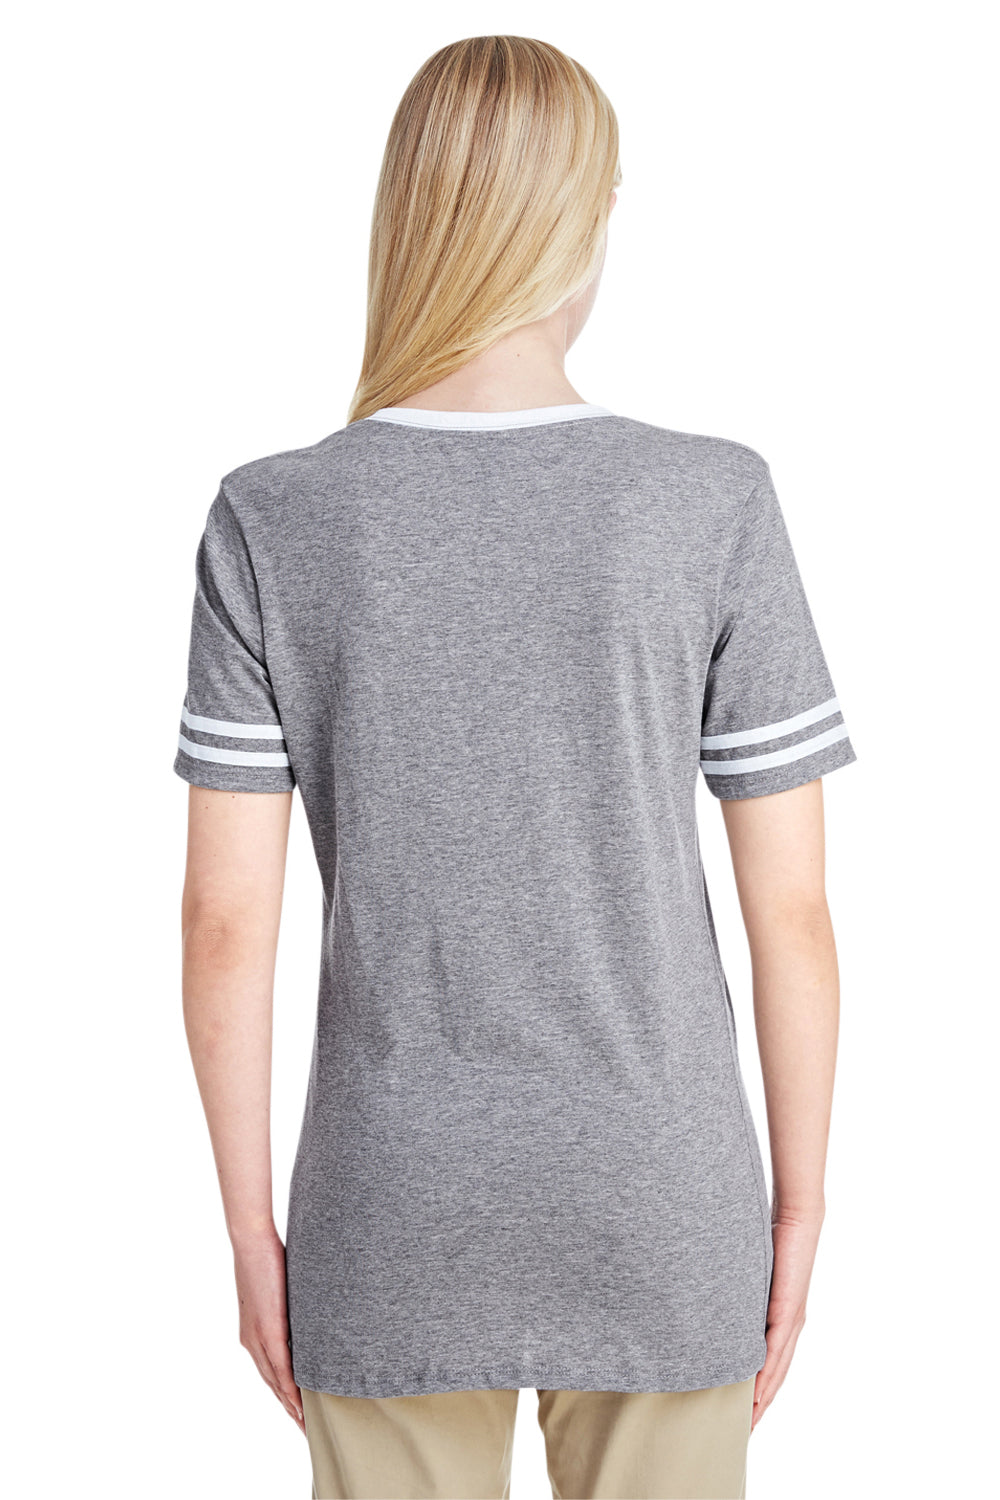 Jerzees 602WVR Womens Varsity Ringer Short Sleeve V-Neck T-Shirt Heather Oxford Grey/White Back